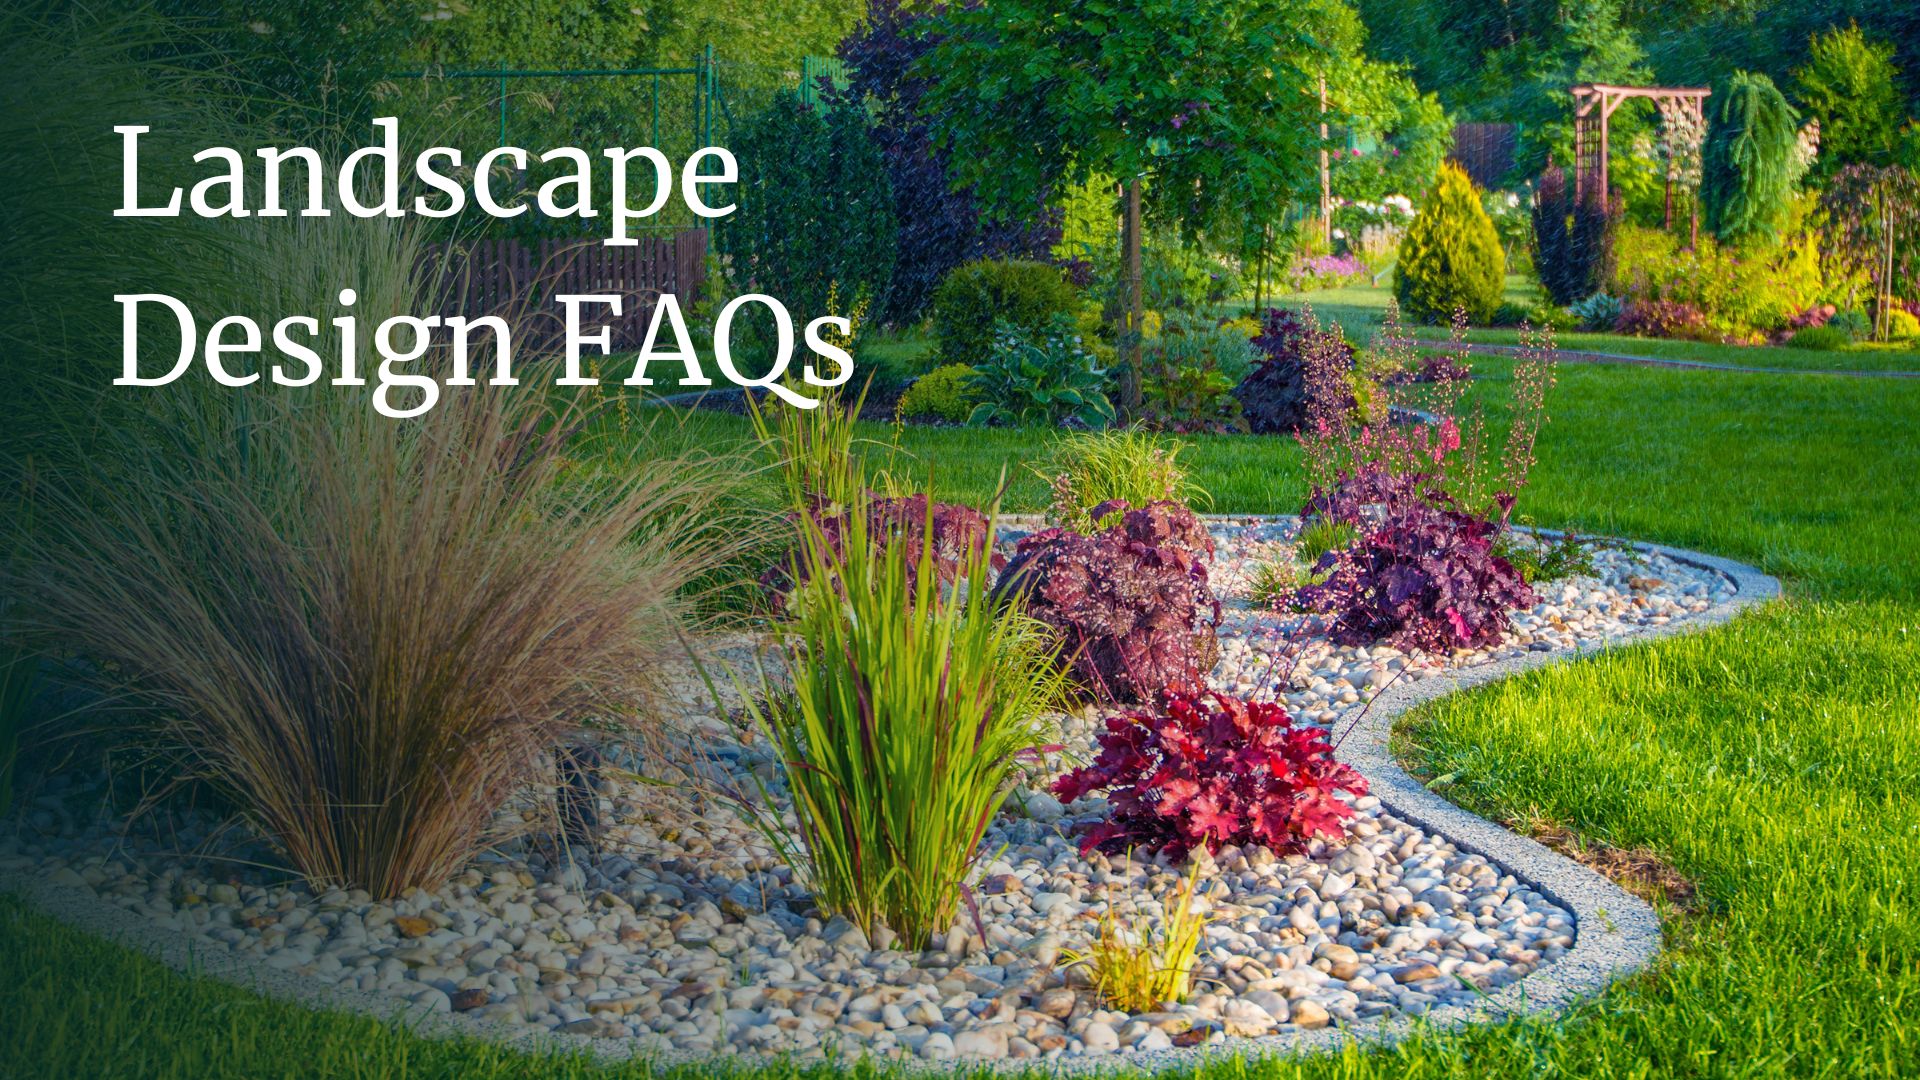 Develop Garden Featured Projects Landscape Architecture Design The SiteGroup